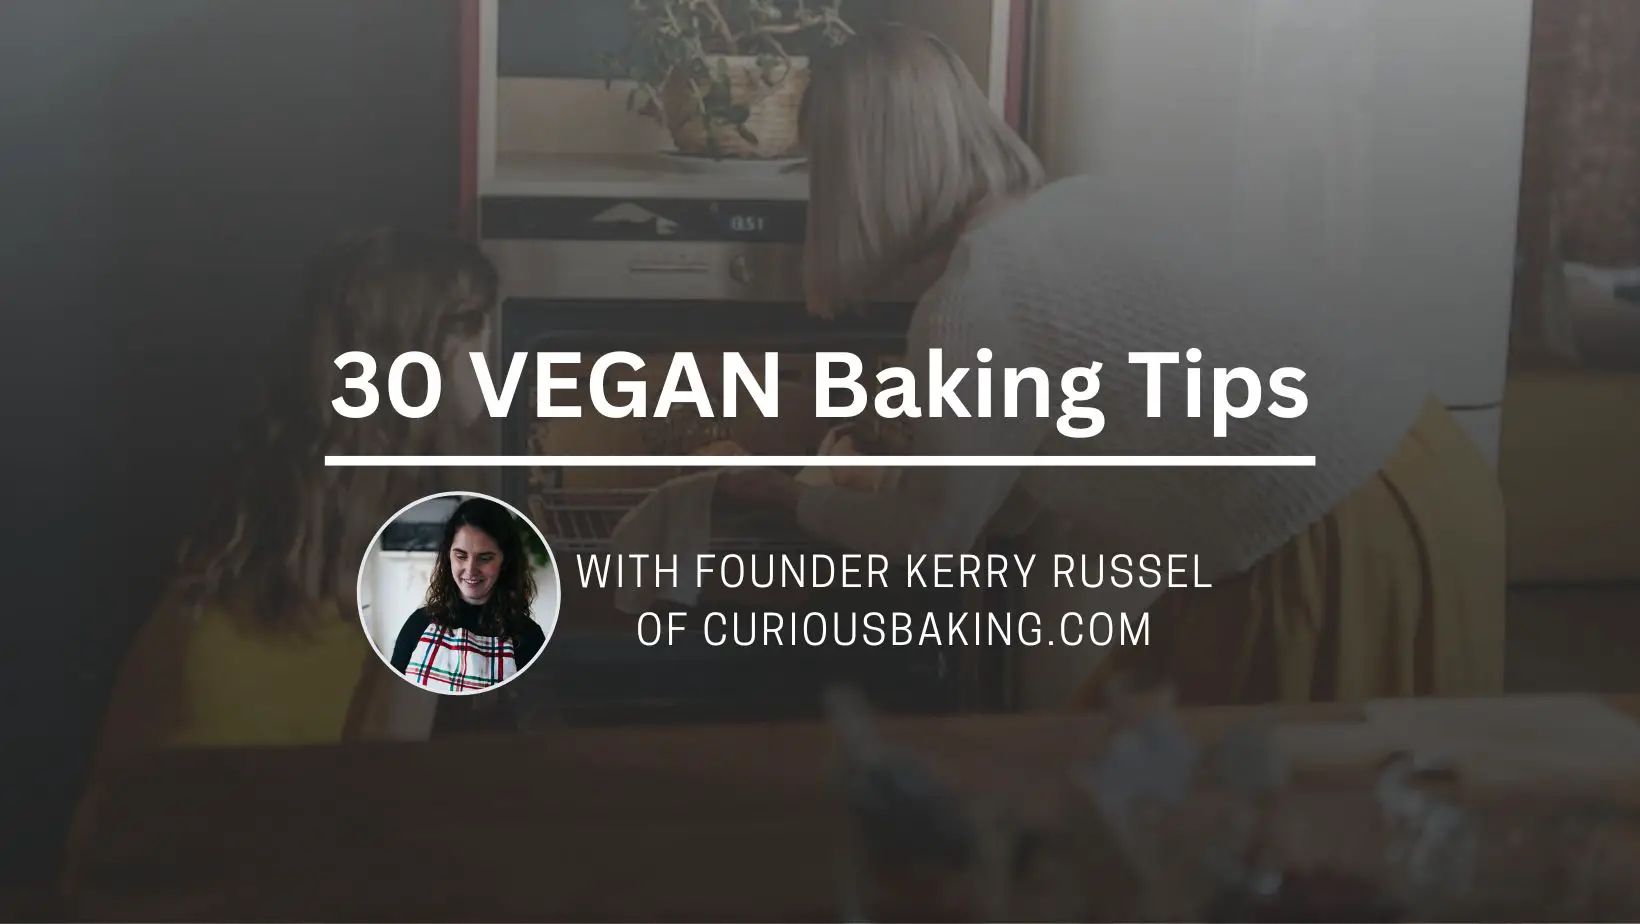 30 Vegan Baking Tips by CuriousBaking.com